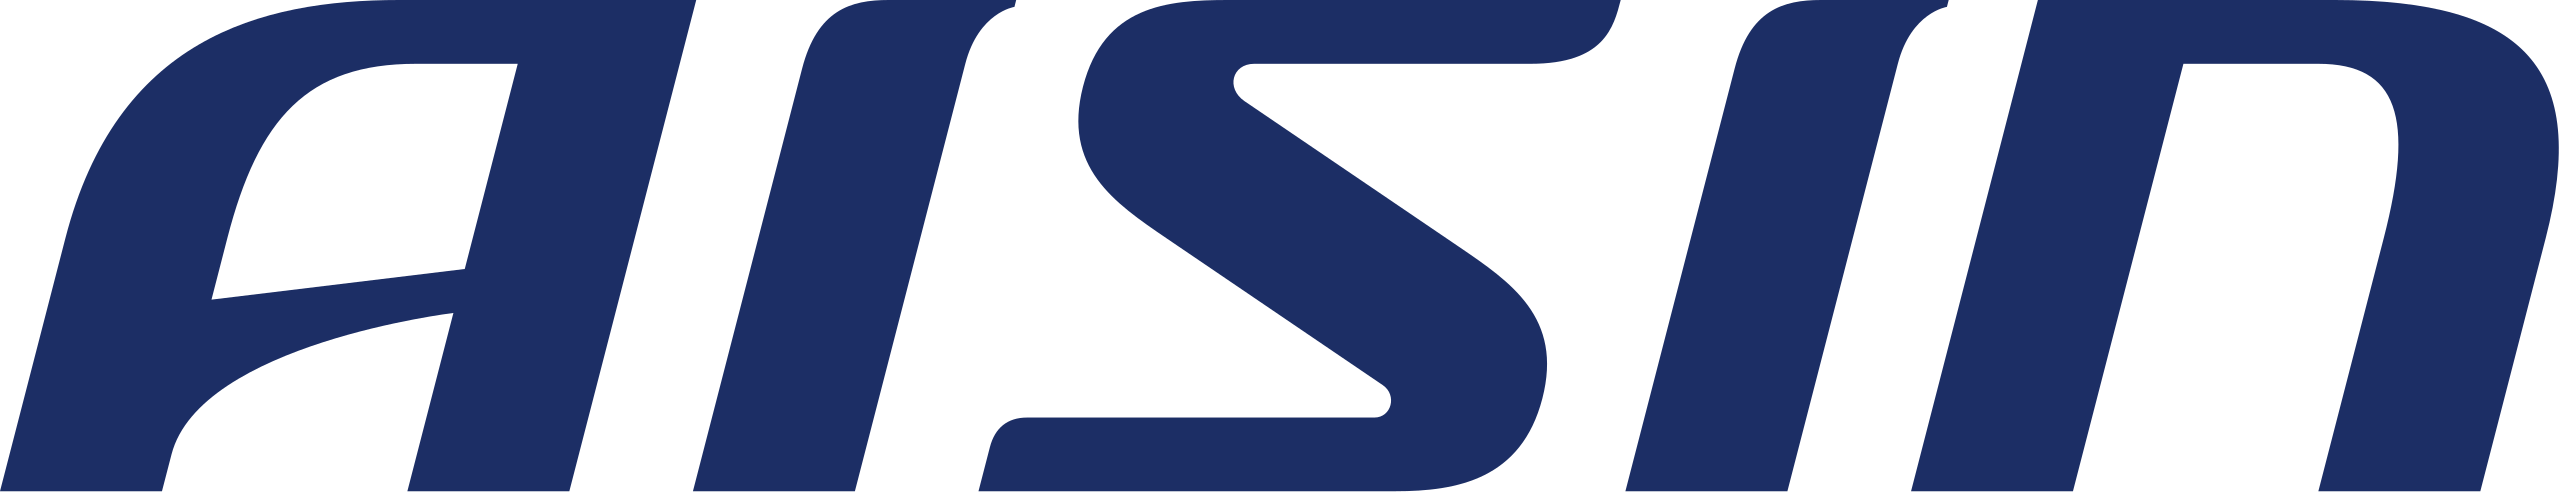 Aisin logo